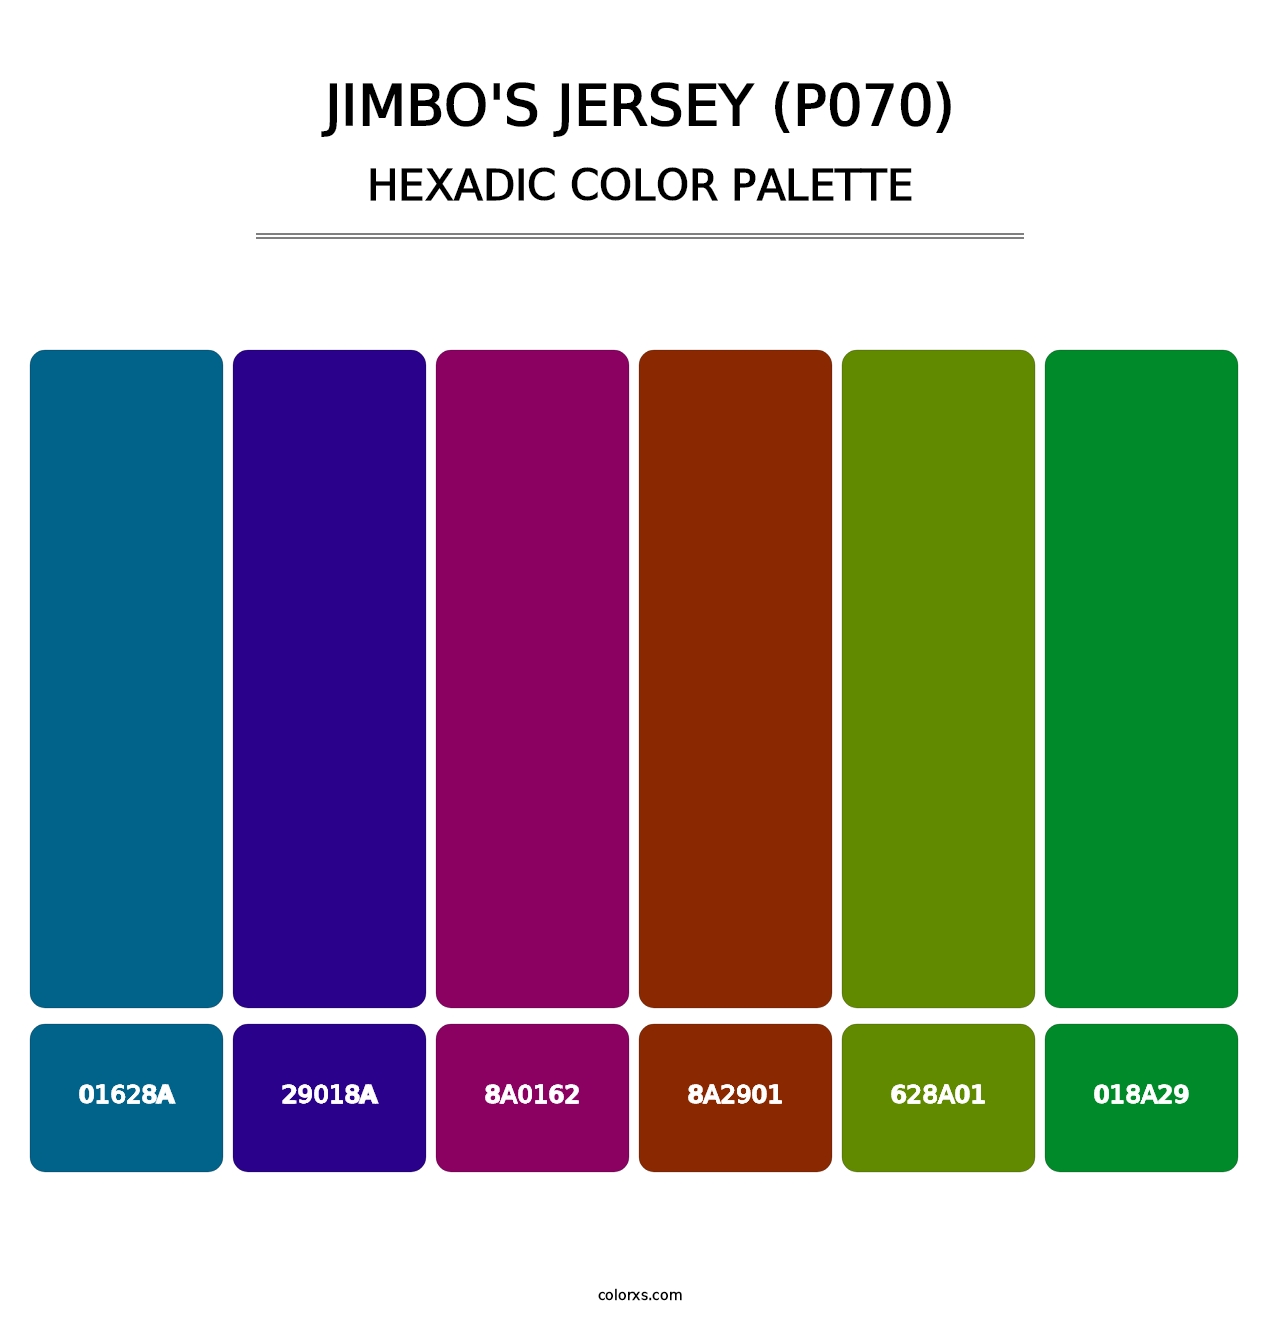 Jimbo's Jersey (P070) - Hexadic Color Palette